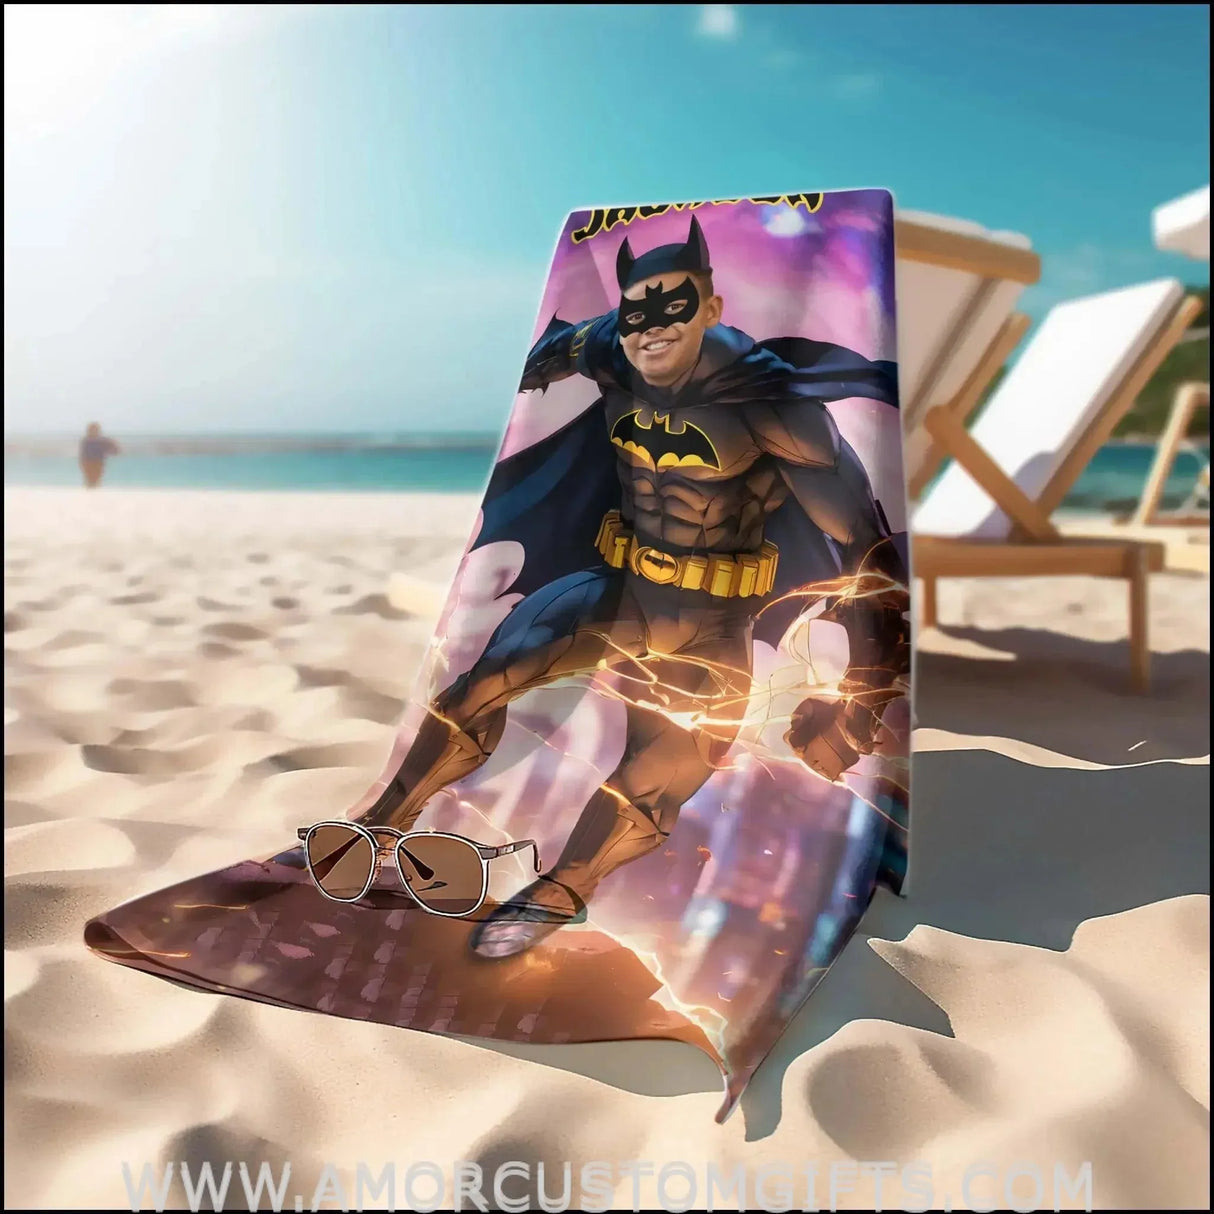 Towels Personalized Bat Hero Beach Towel | Customized Superhero Theme Pool Towel